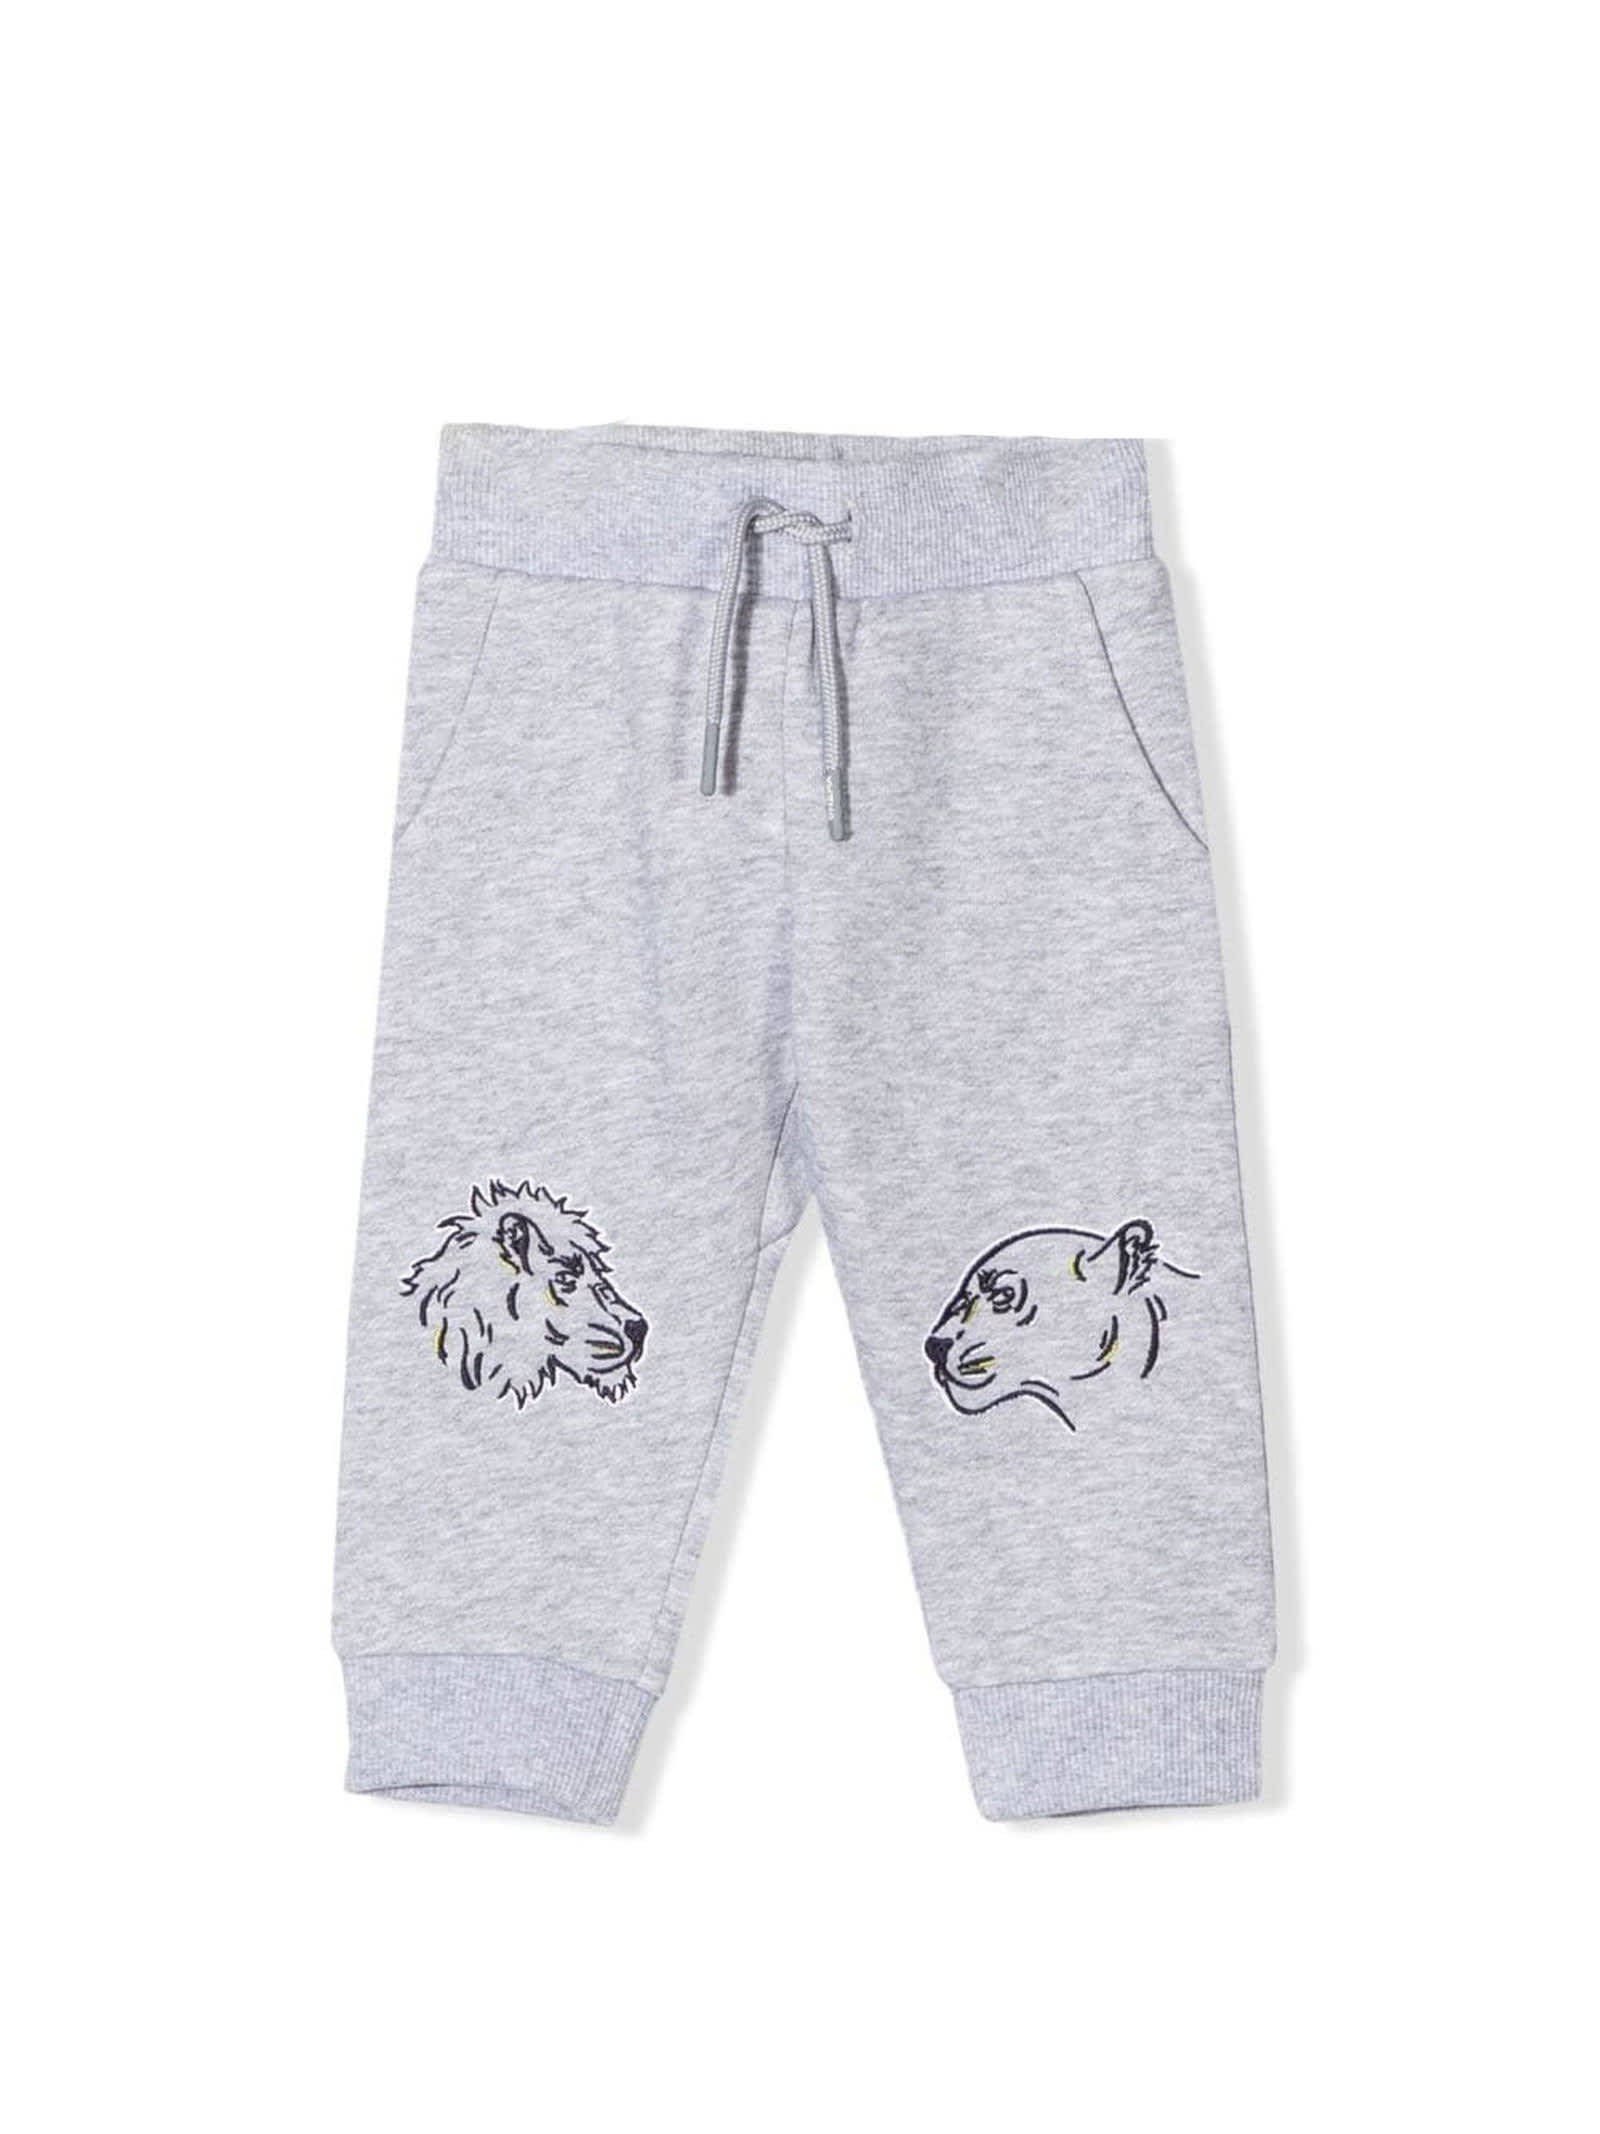 Kenzo Kids Grey Cotton Track Pants